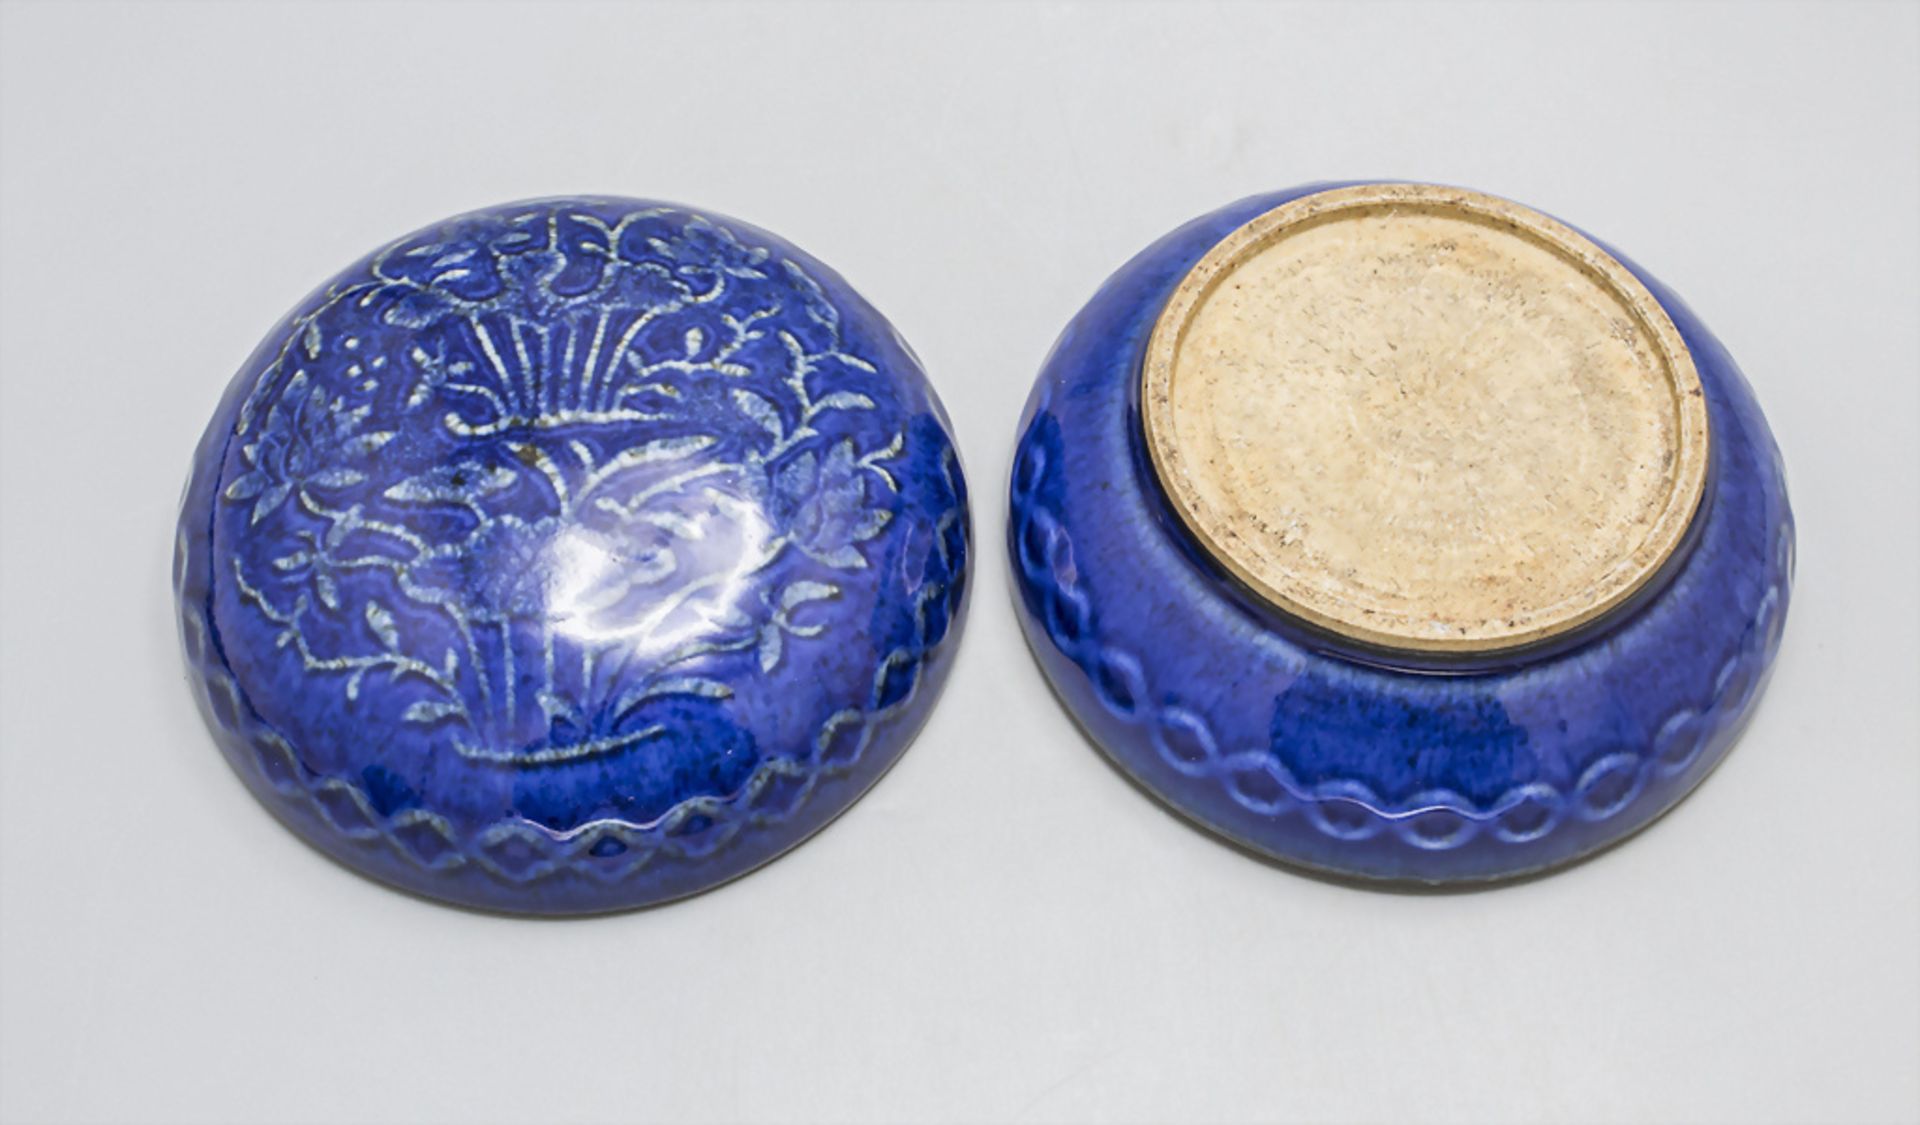 Blaue Porzellan Deckeldose / A blue porcelain lidded box, China, 19.-20. Jh. - Bild 4 aus 4